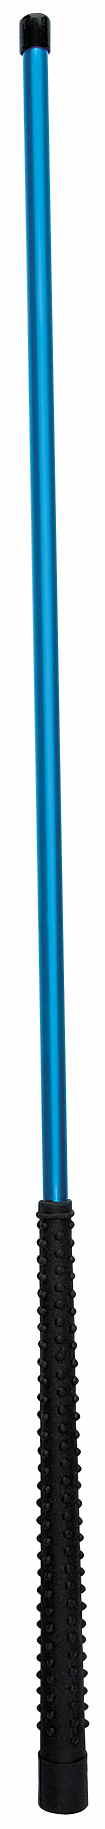 Weaver Blue Pig Stick